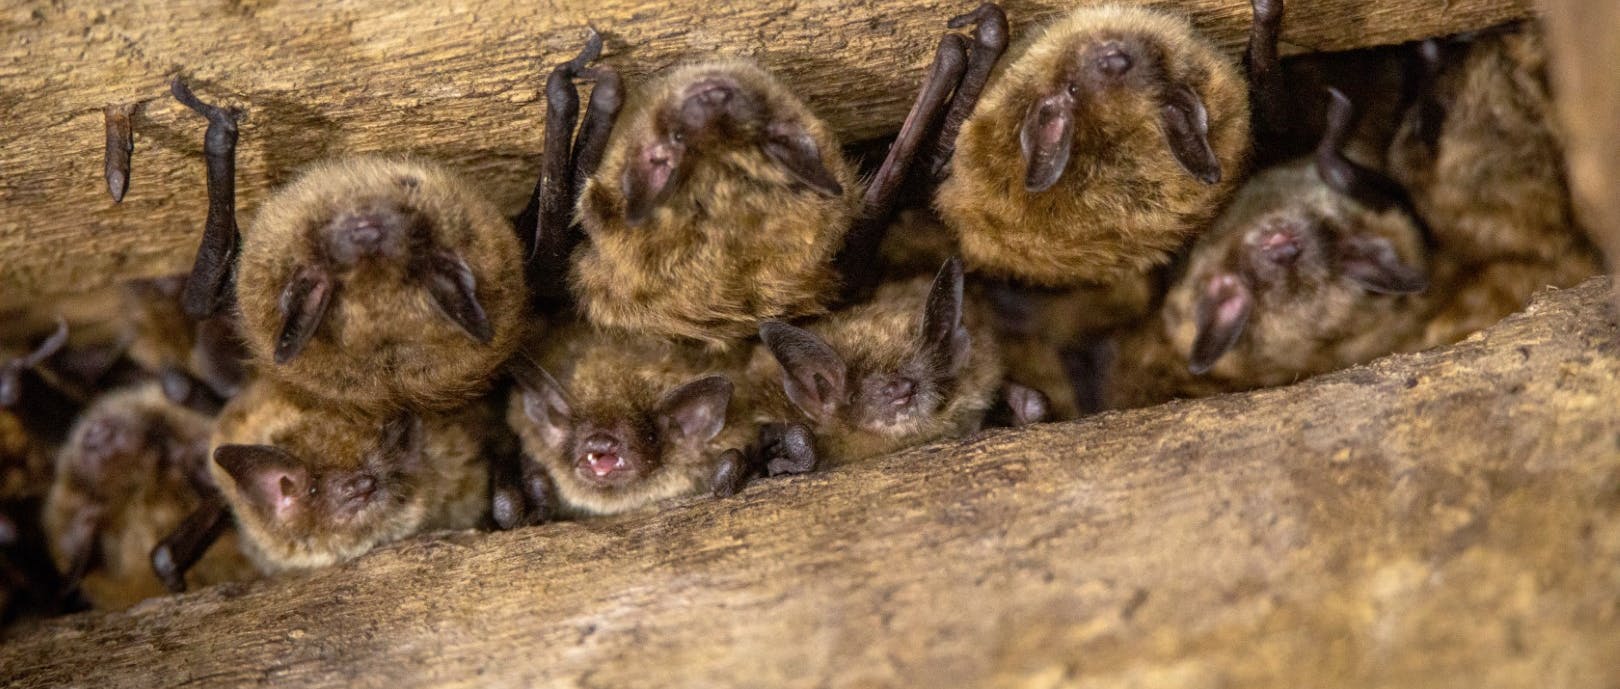 A group of bats